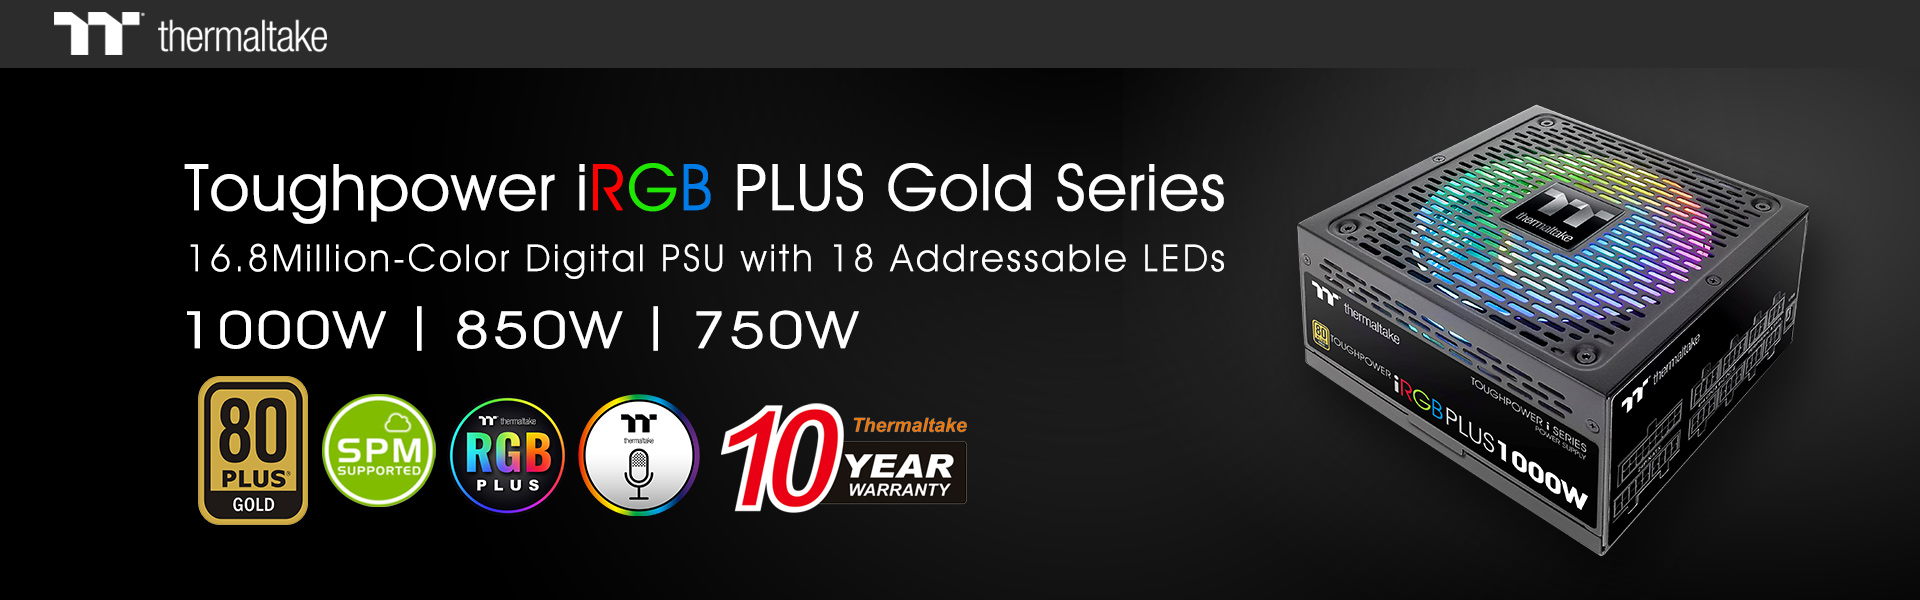 thermaltake new toughpower irgb plus gold series 1 Thermaltake เปิดตัวเพาวเวอร์ซัพพลาย Toughpower iRGB PLUS Gold Series TT Premium Edition รุ่นใหม่ล่าสุดในงาน CES2019 